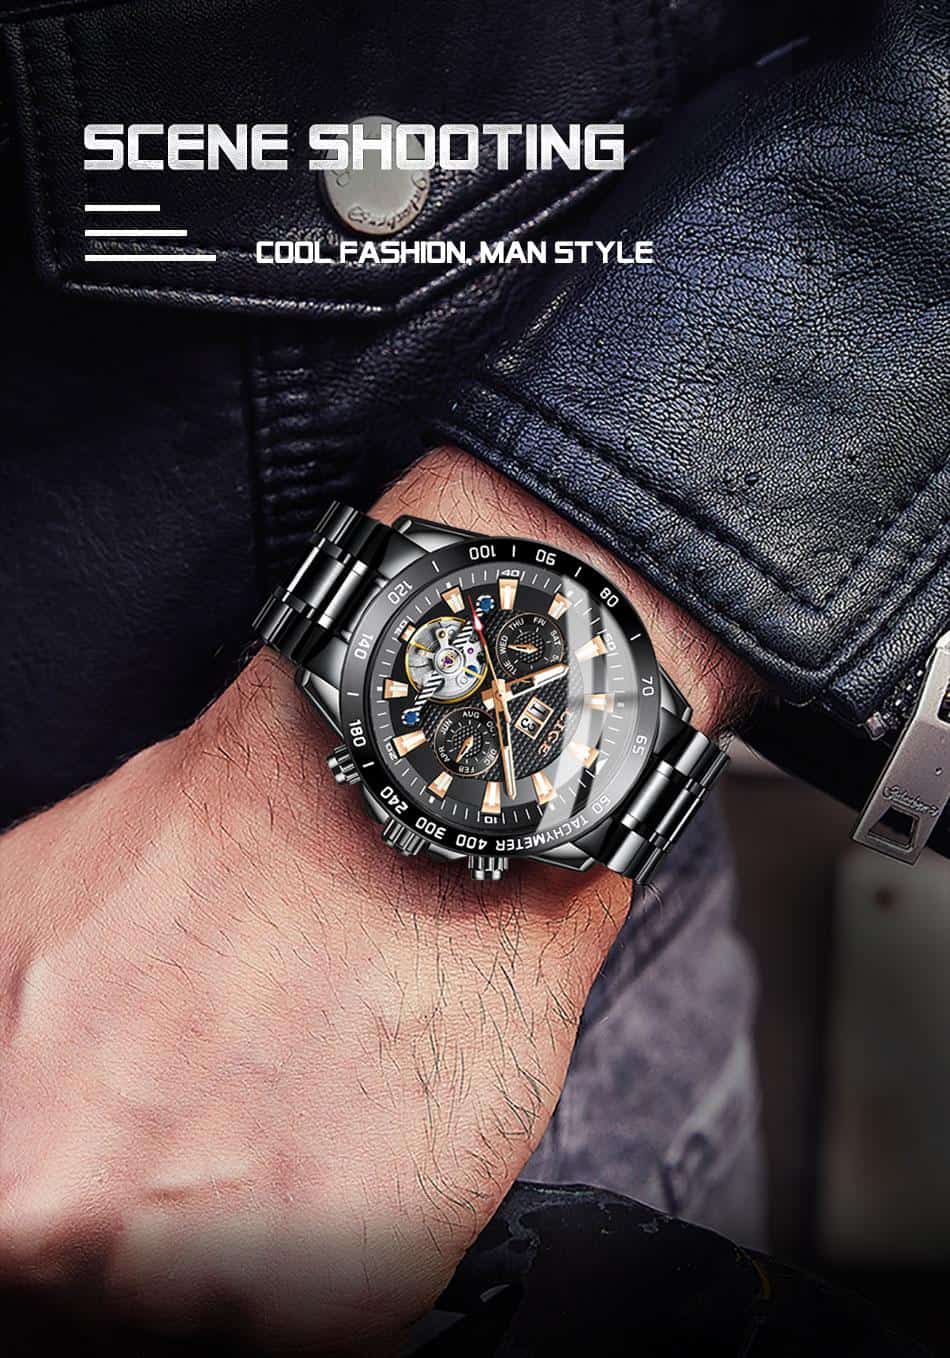 2020 LIGE Mens Watch Top Brand Luxury Fashion Business Watch Men's Mechanical Watch Calendar Waterproof Clock reloj hombre+Box